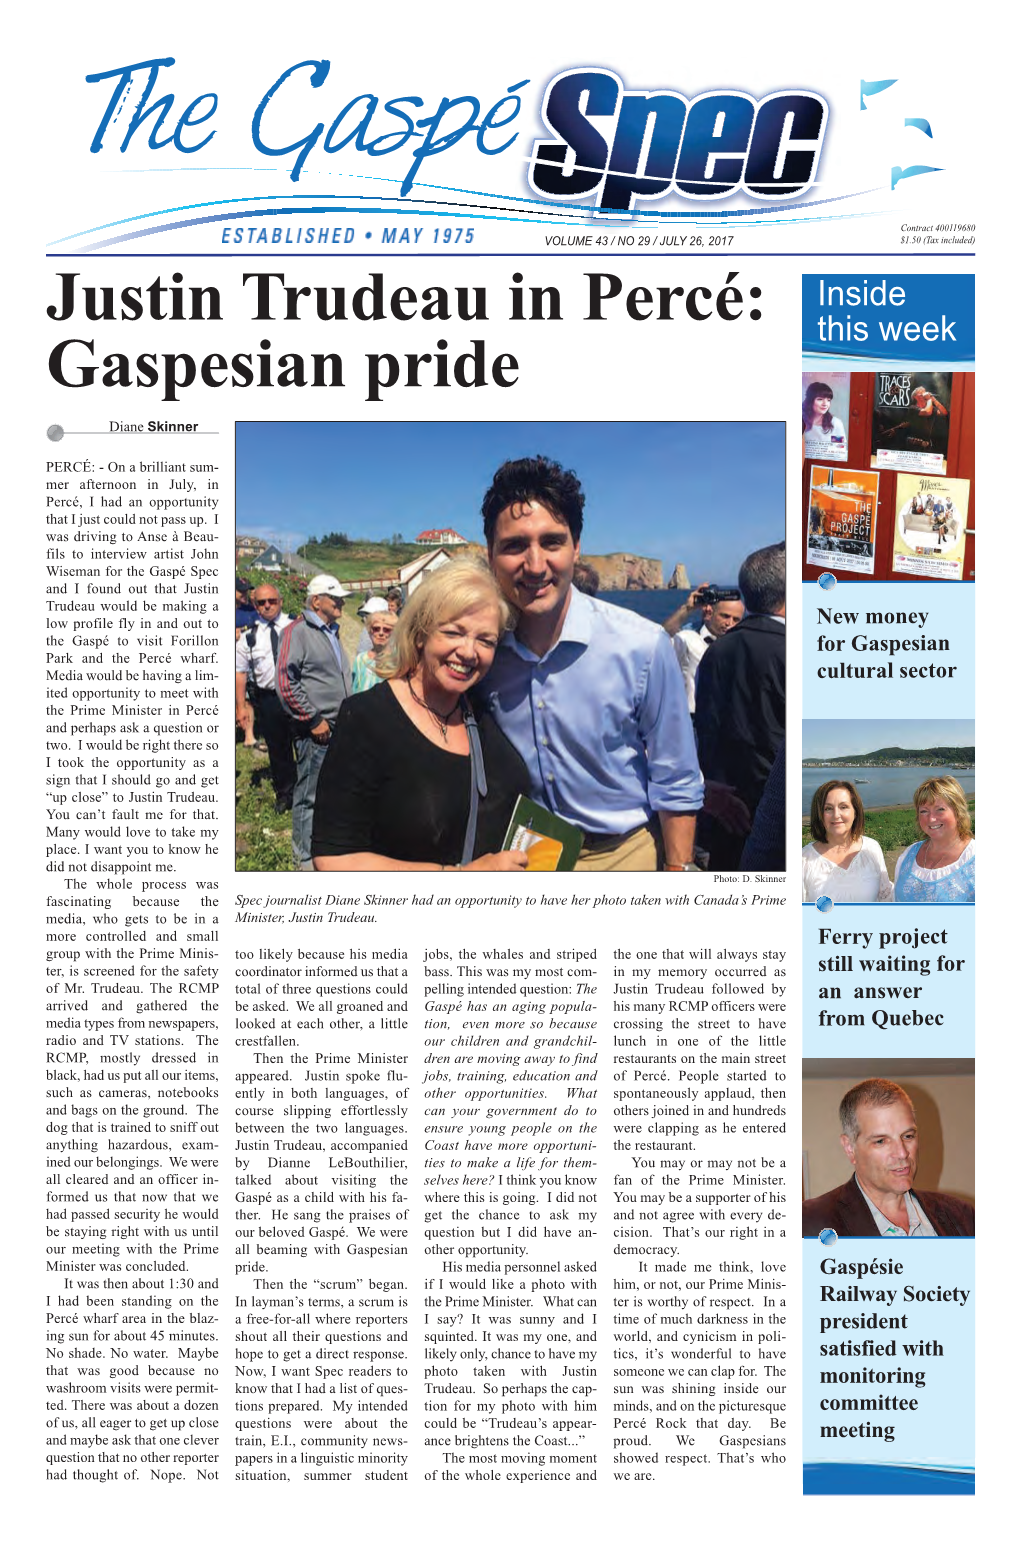 Justin Trudeau in Percé: This Week Gaspesian Pride